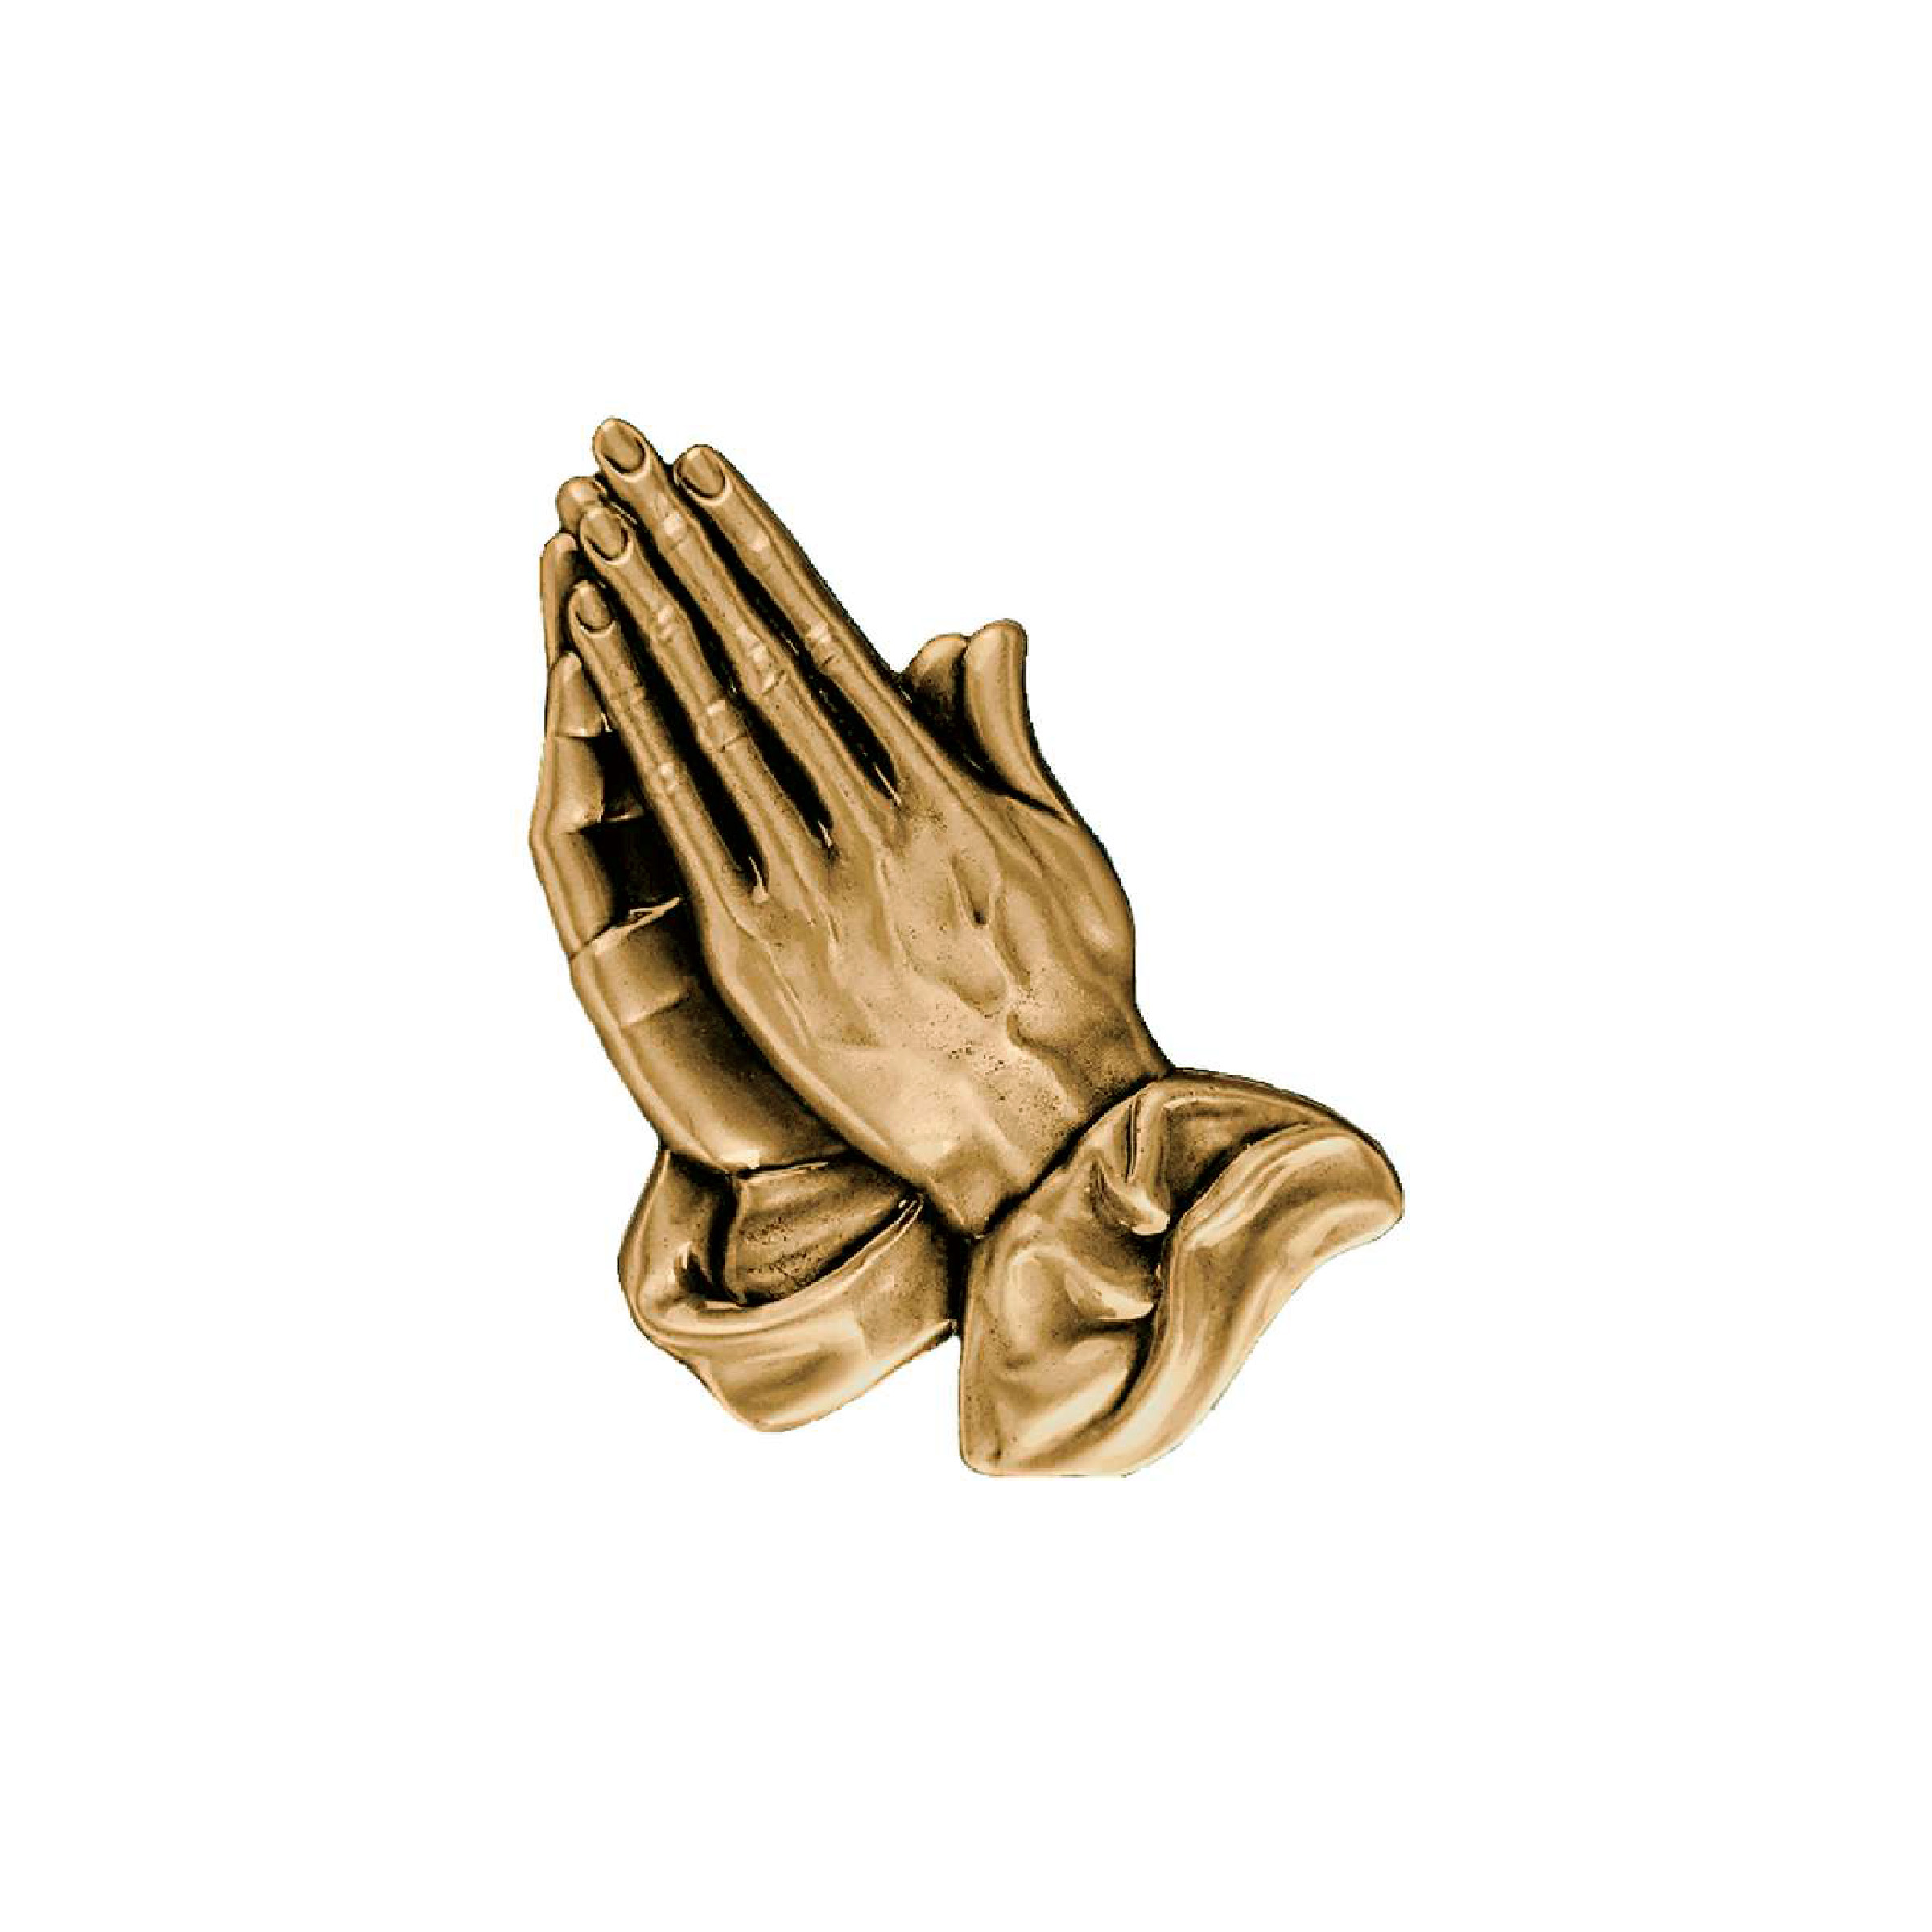 Praying Hands (facing left) 1.4″ x 1.9″